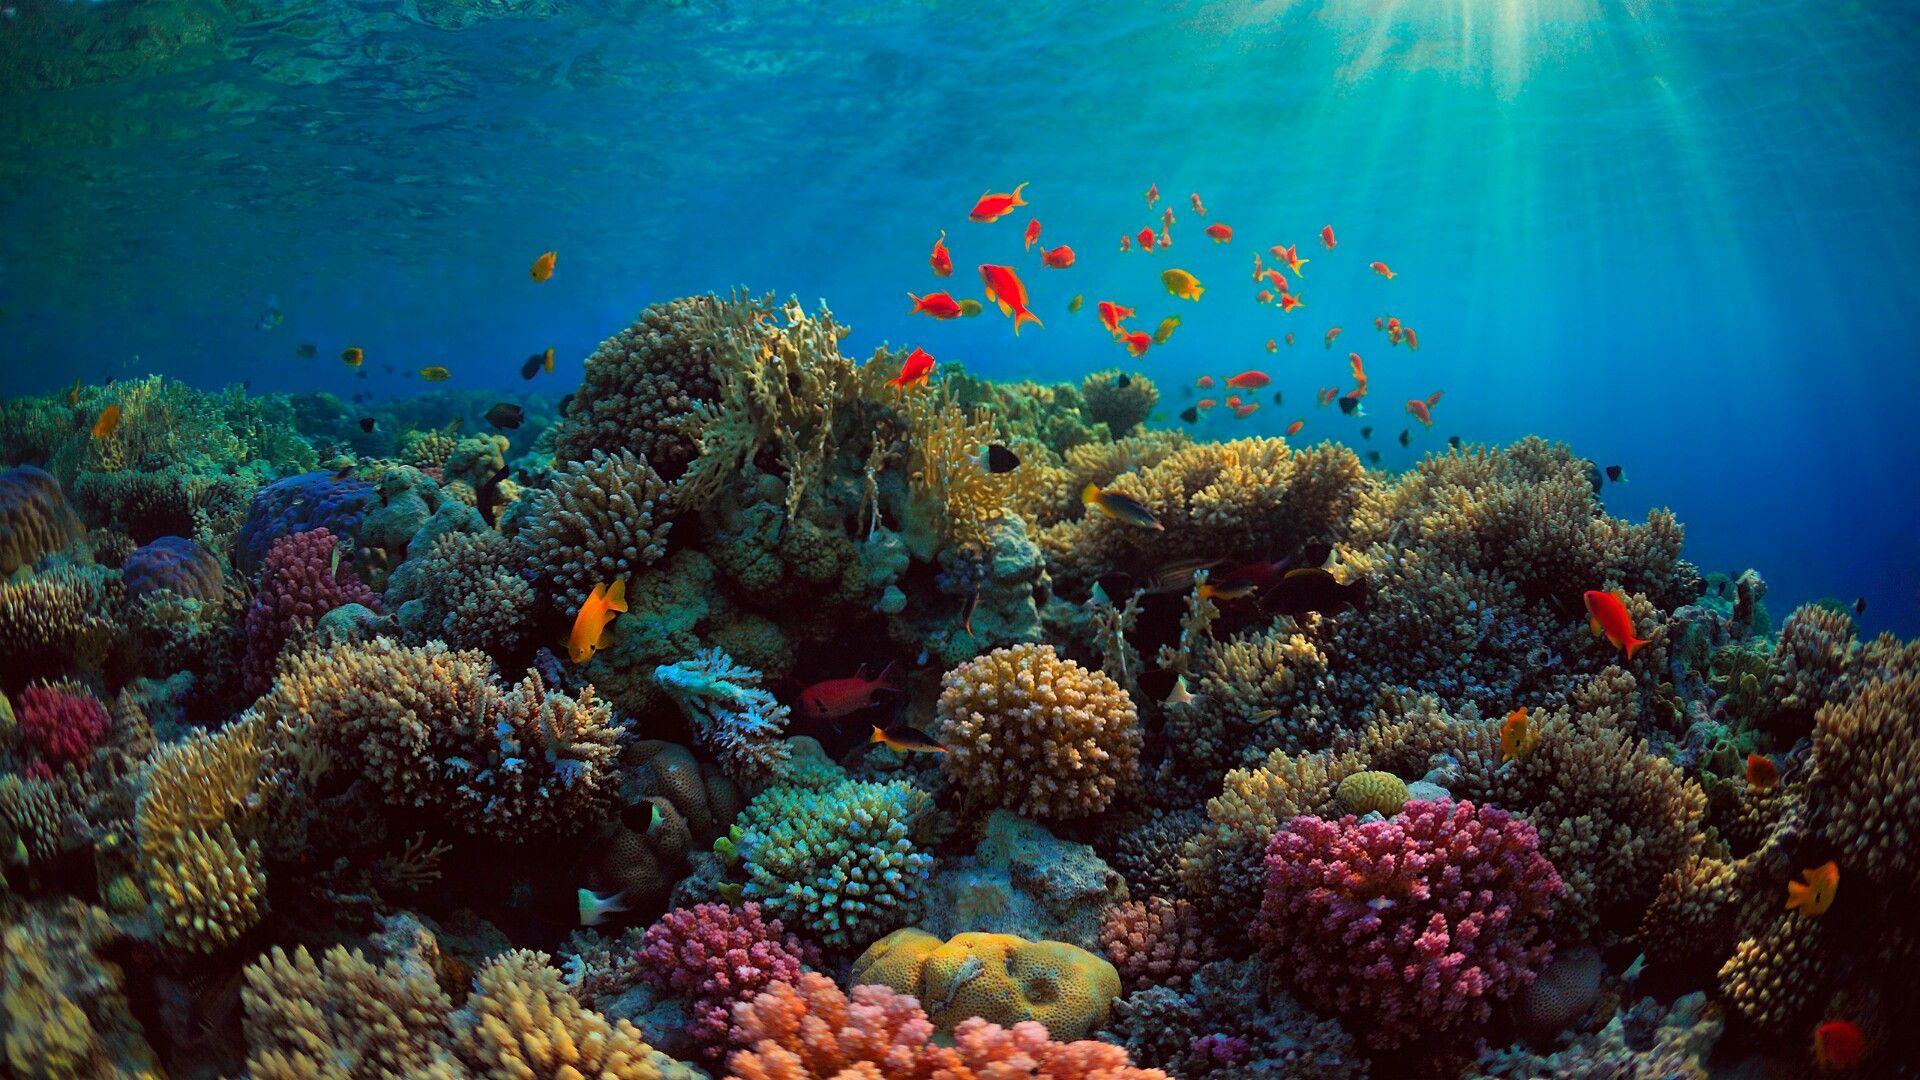 Real Coral Reef 4K Wallpapers - Top Free Real Coral Reef ...